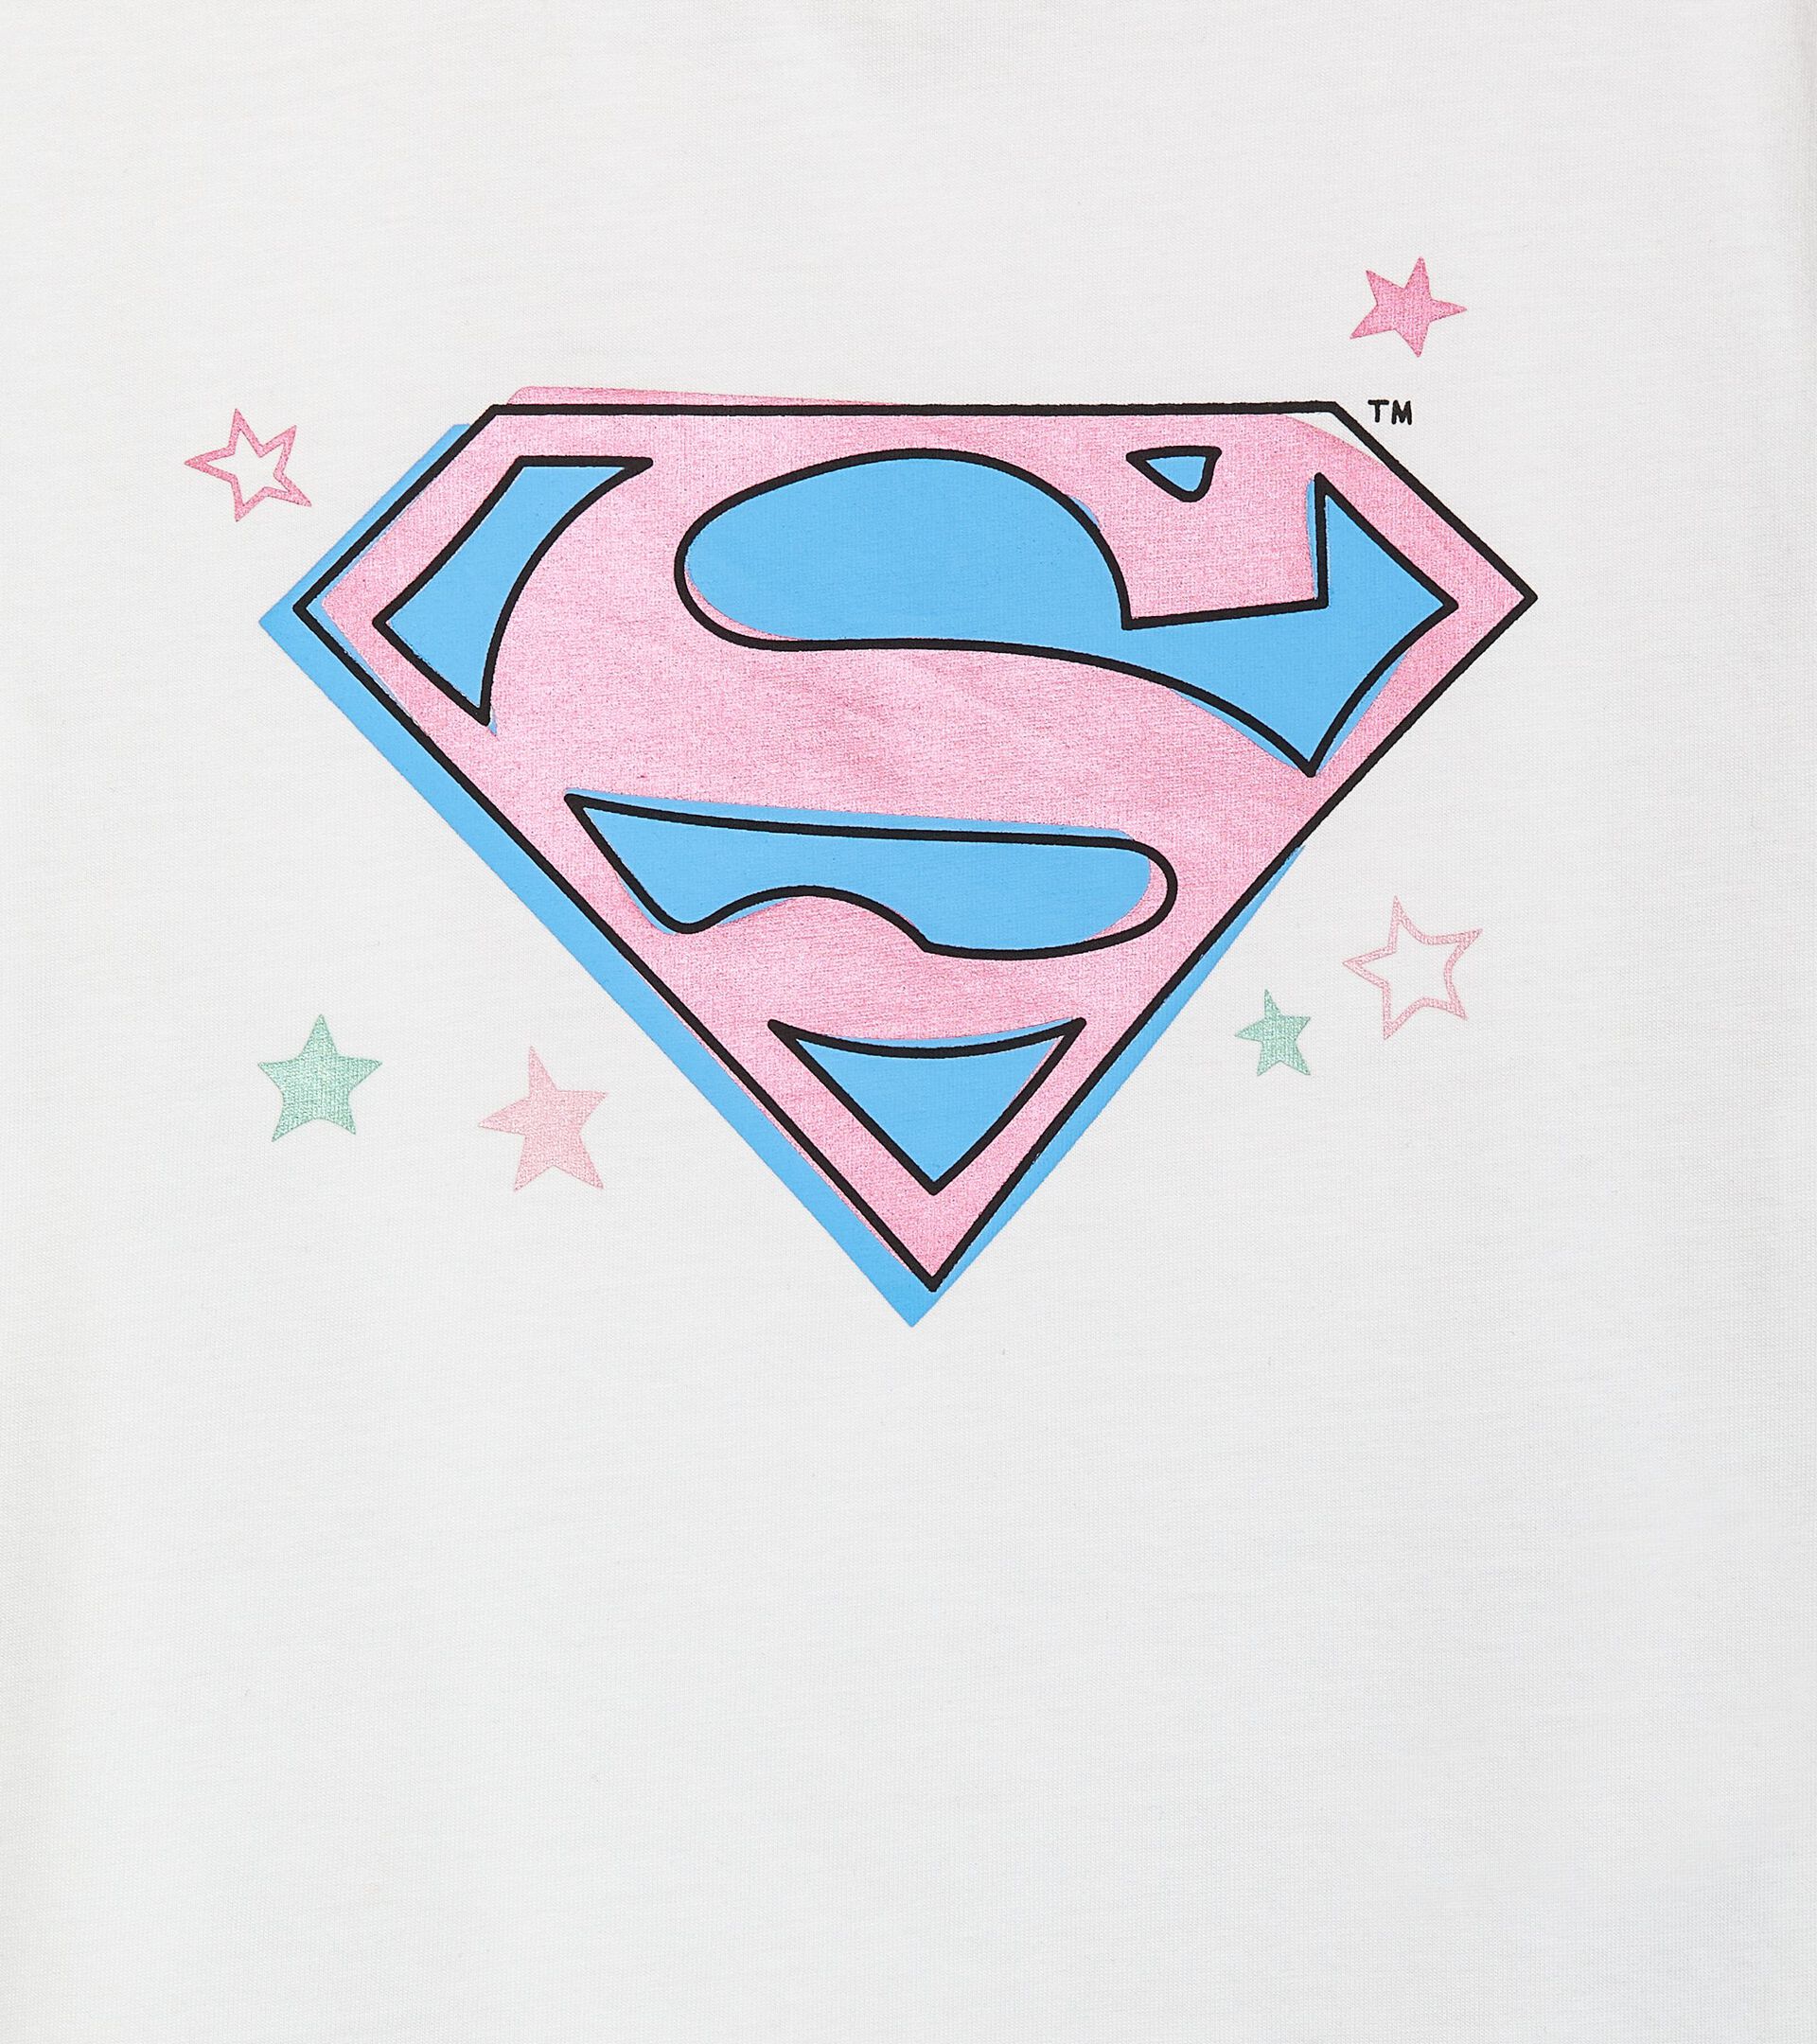 Superheroine T-shirt - Girl JG.T-SHIRT SS SUPERGIRL OPTICAL WHITE - Diadora